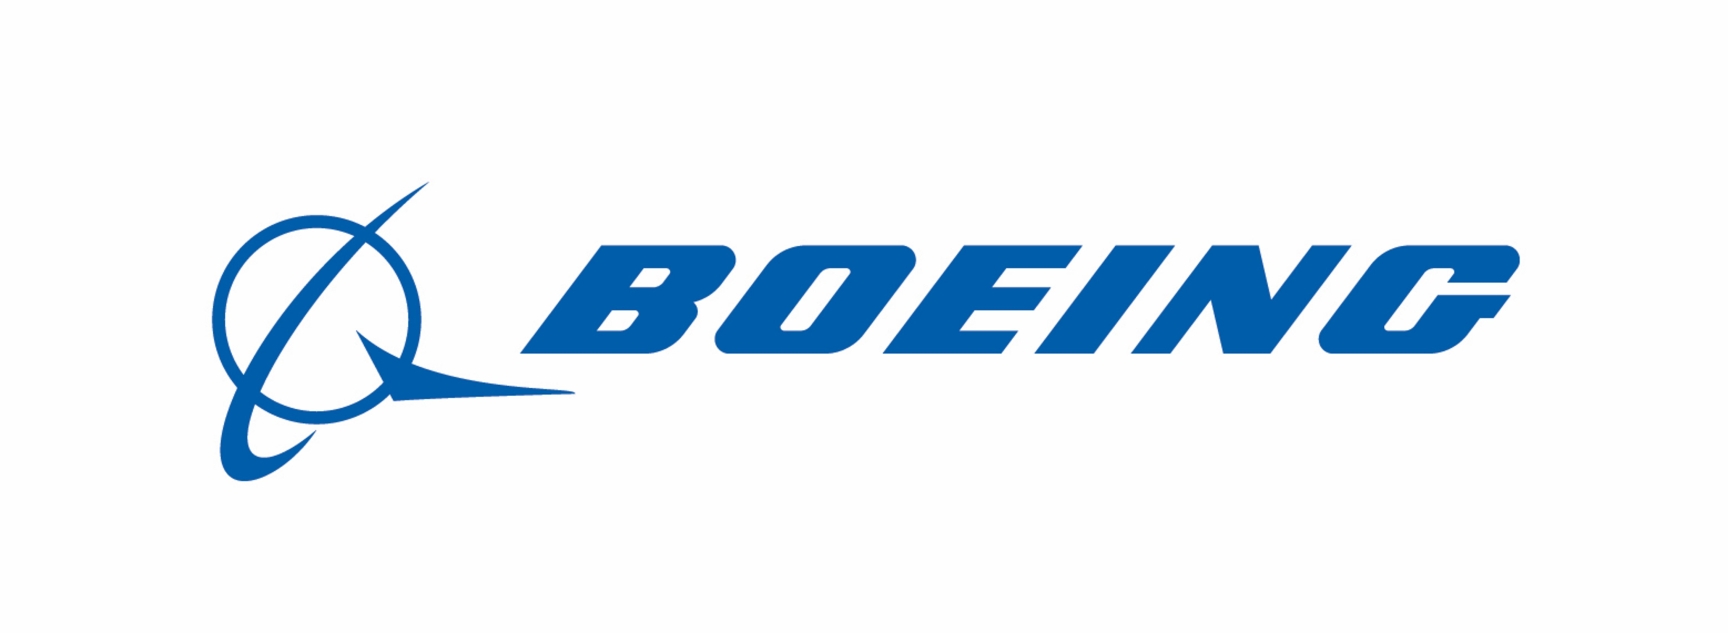 Boeing_logo1728x633